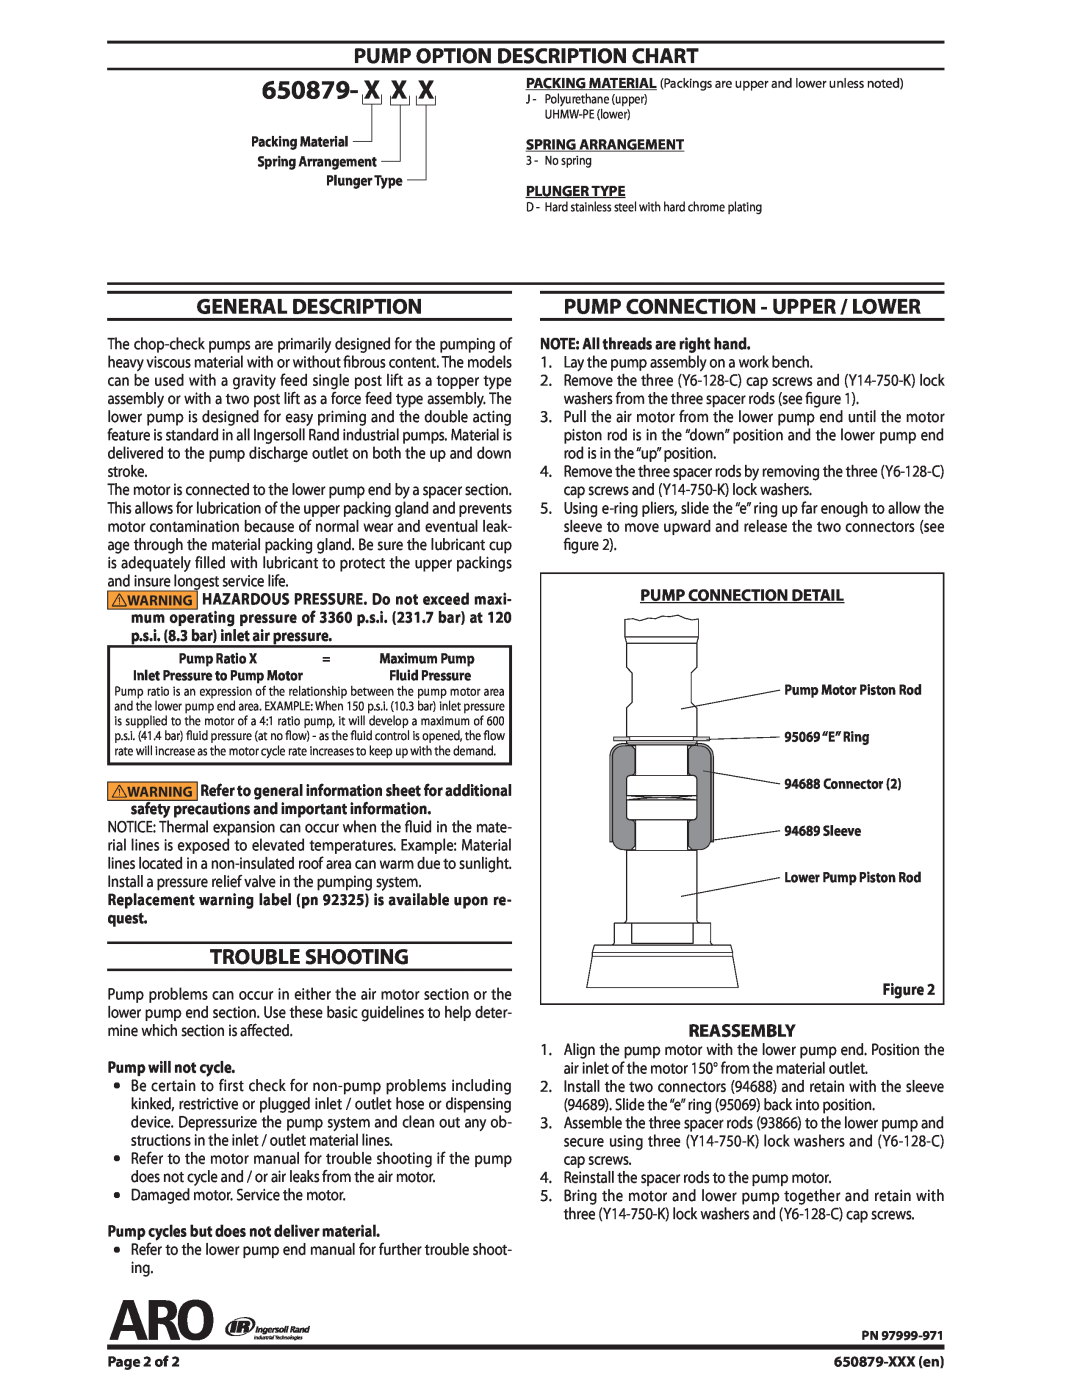 Ingersoll-Rand 650879-XXX specifications Pump Option Description Chart, General Description, Trouble Shooting, Reassembly 